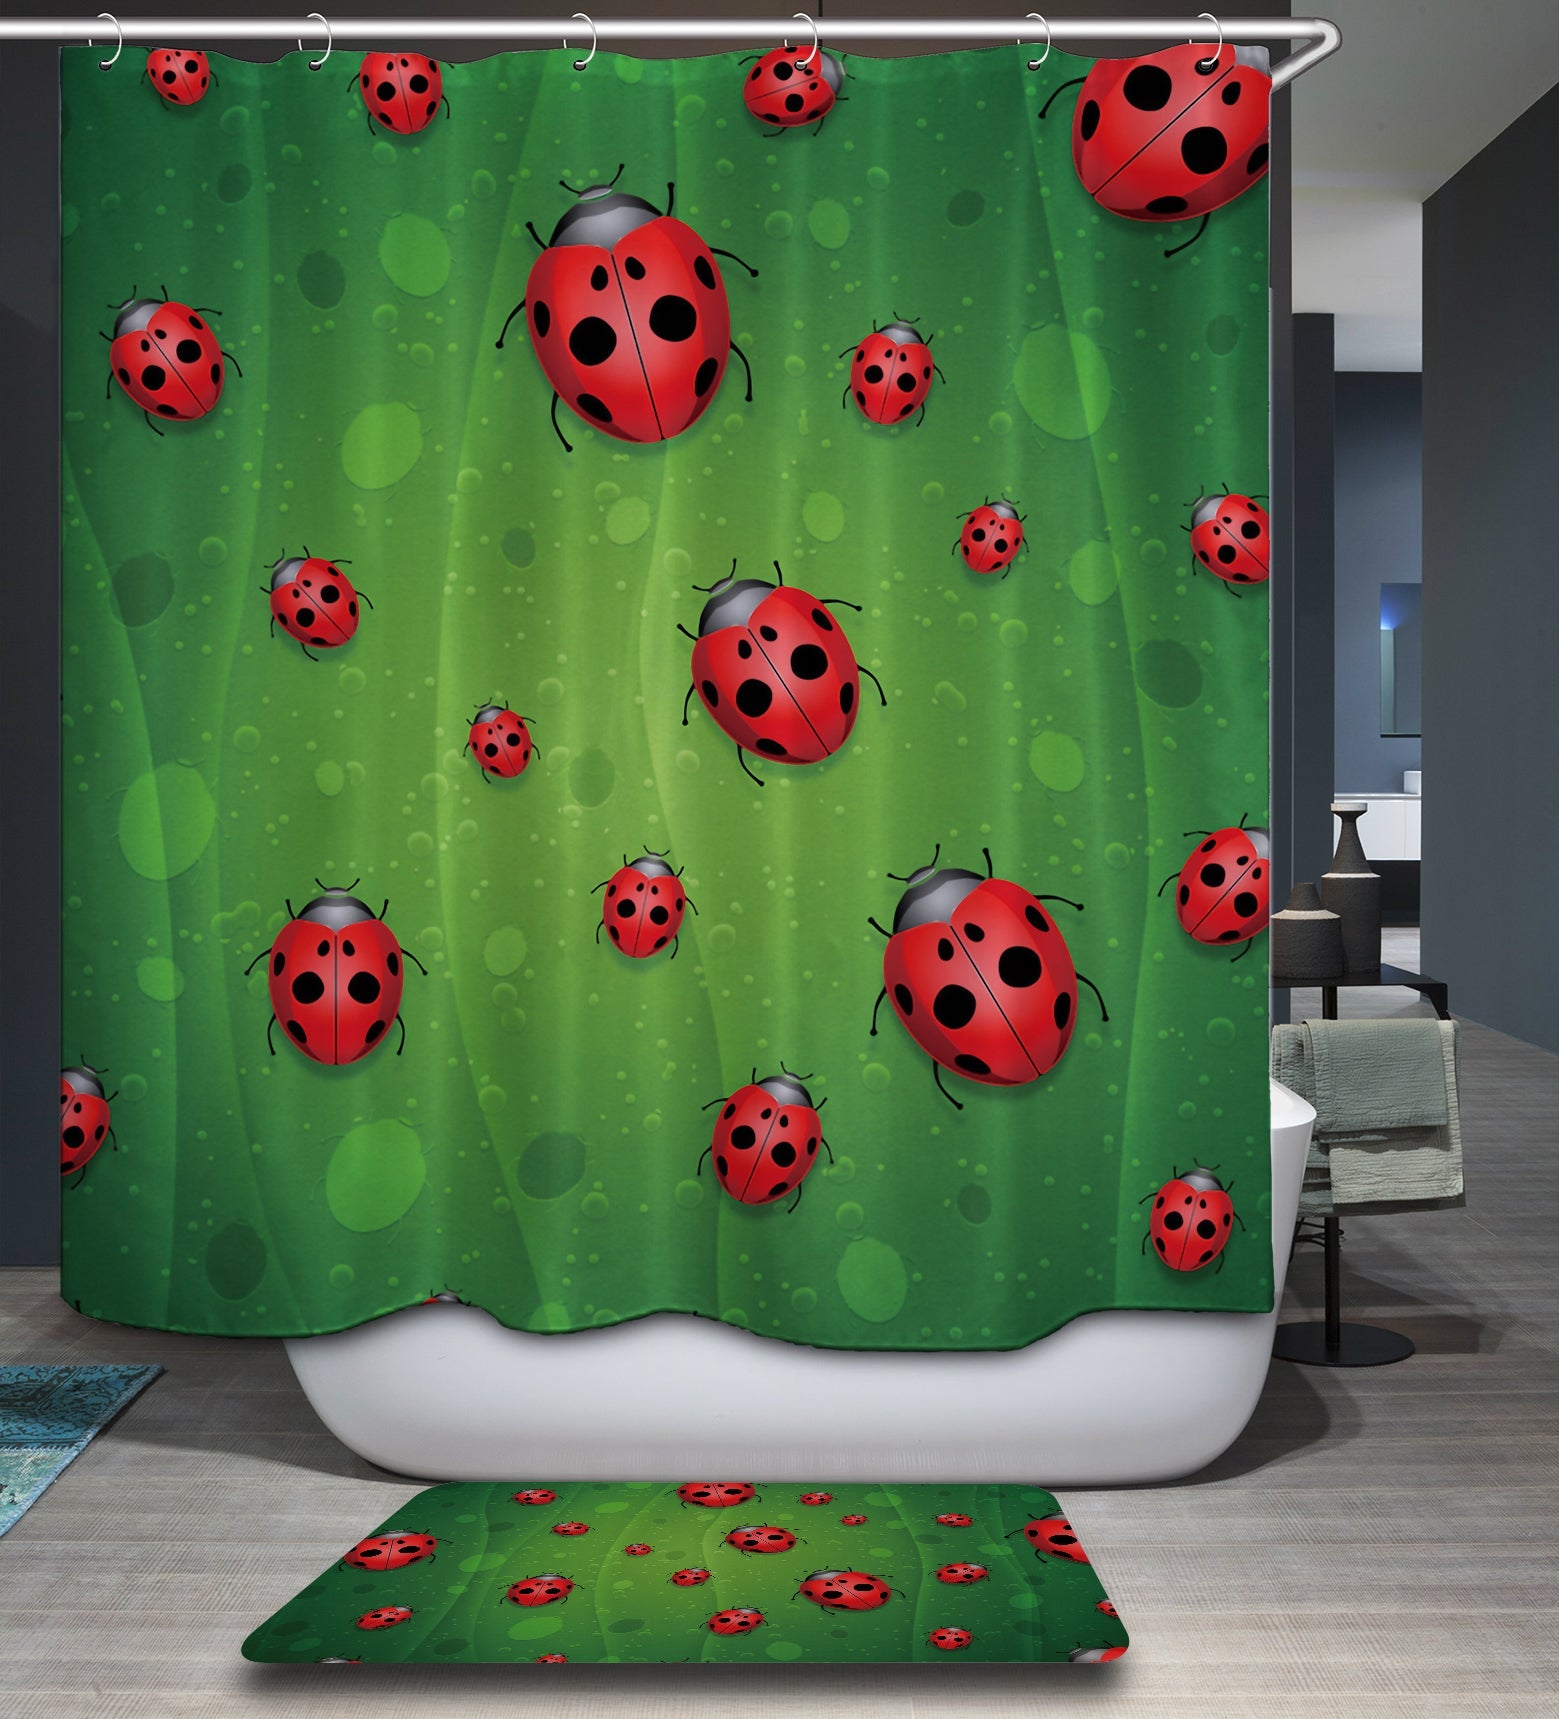 Green Leaf Vein Ladybug Shower Curtain Bathroom Decor